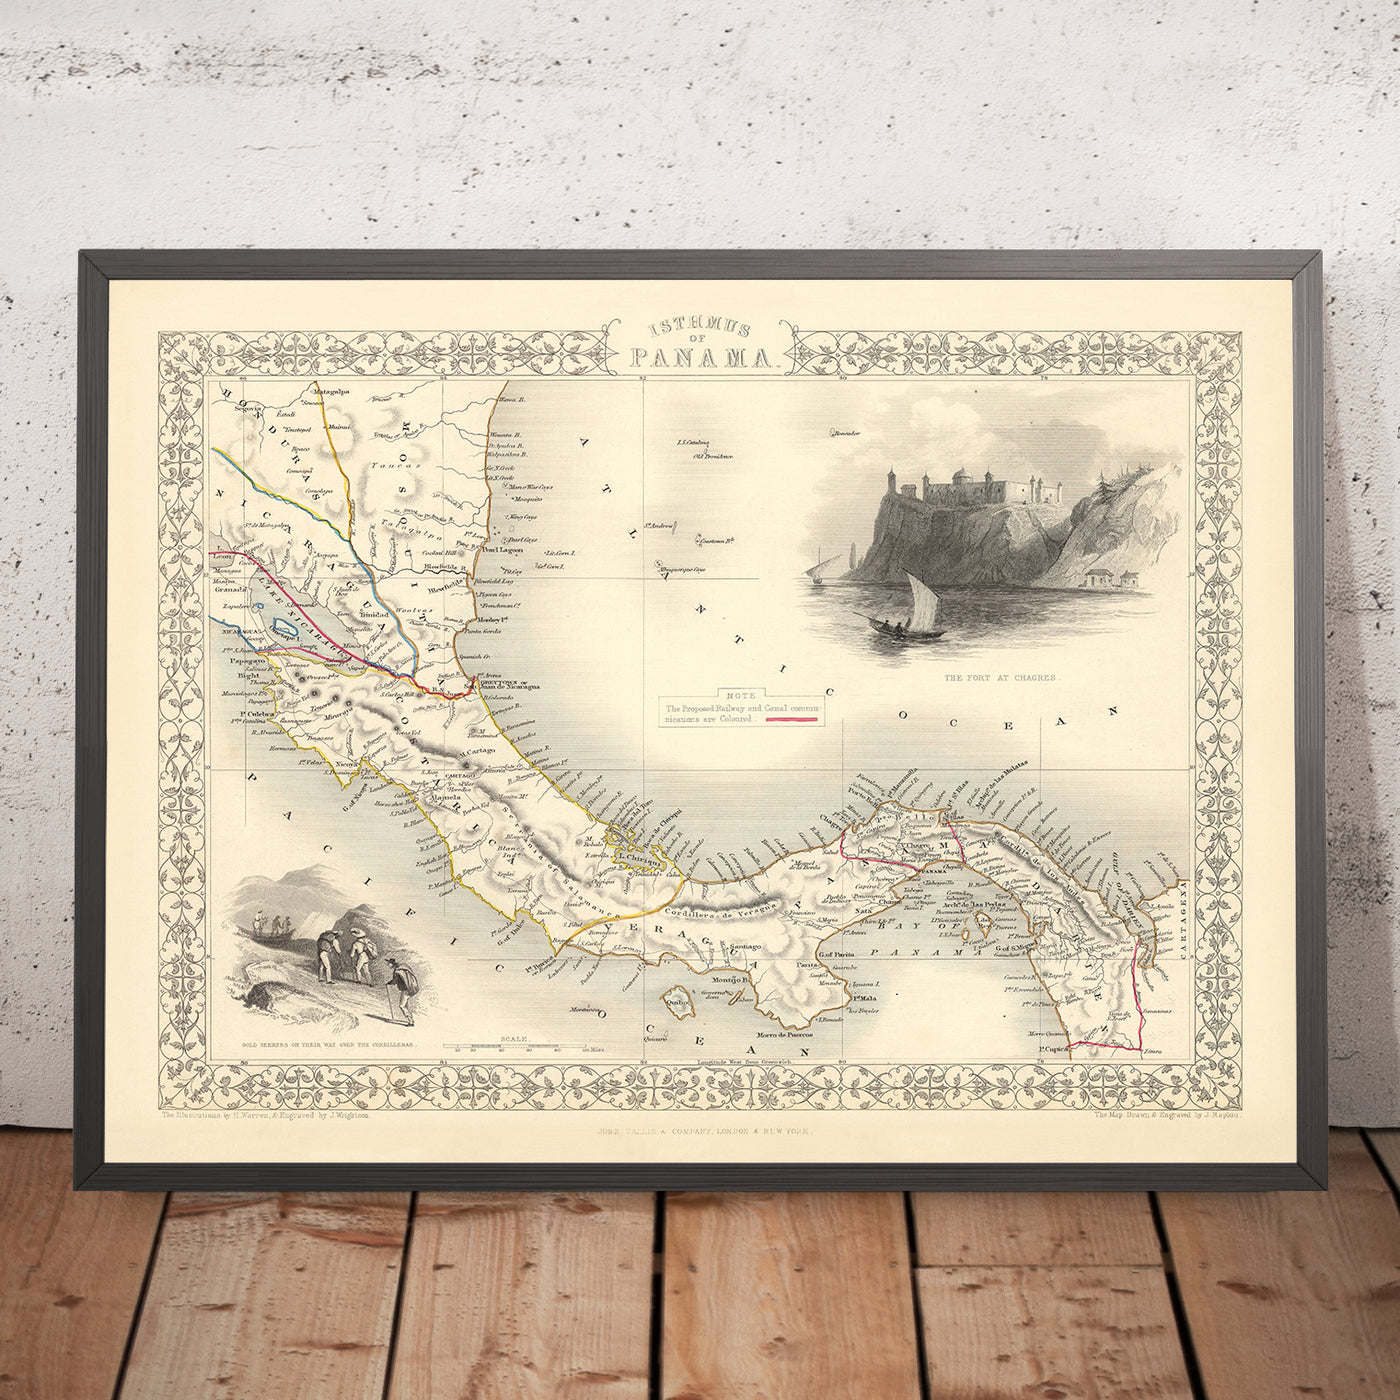 Old Detailed Map of Panama by Tallis, 1851: Panama Canal, Pacific Ocean, Caribbean Sea, Chagres River, Cordillera de San Blas